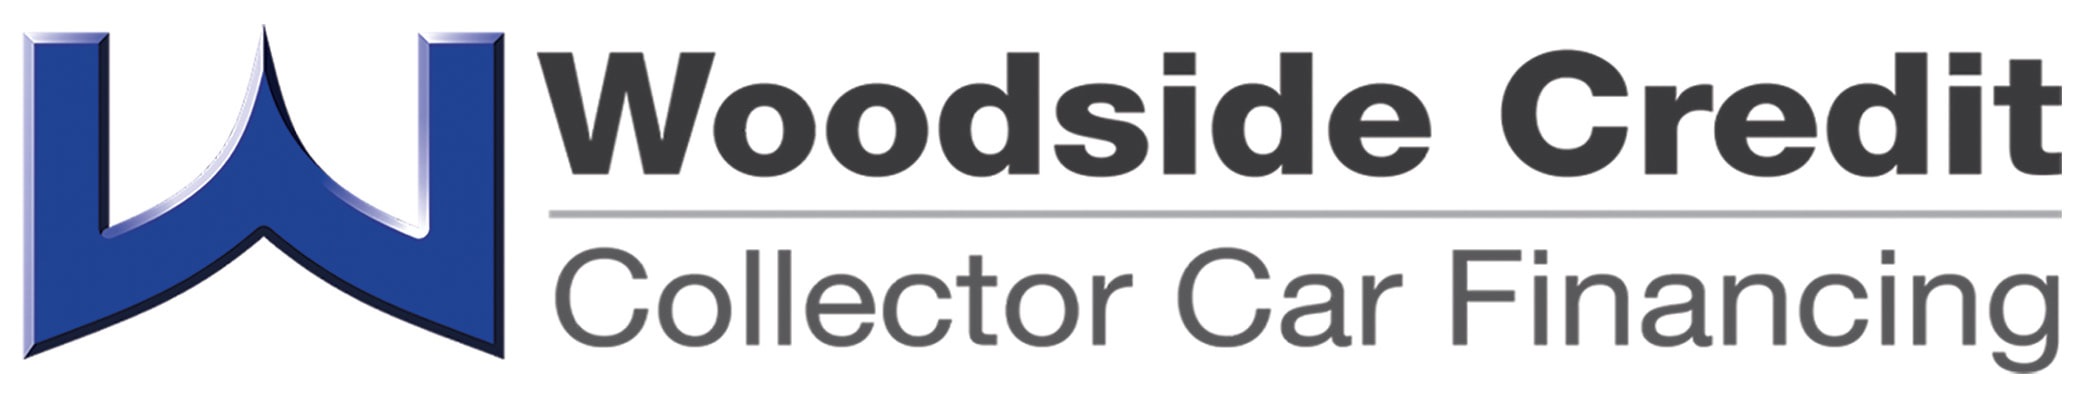 Woodside Credit Collector Car Financing Logo